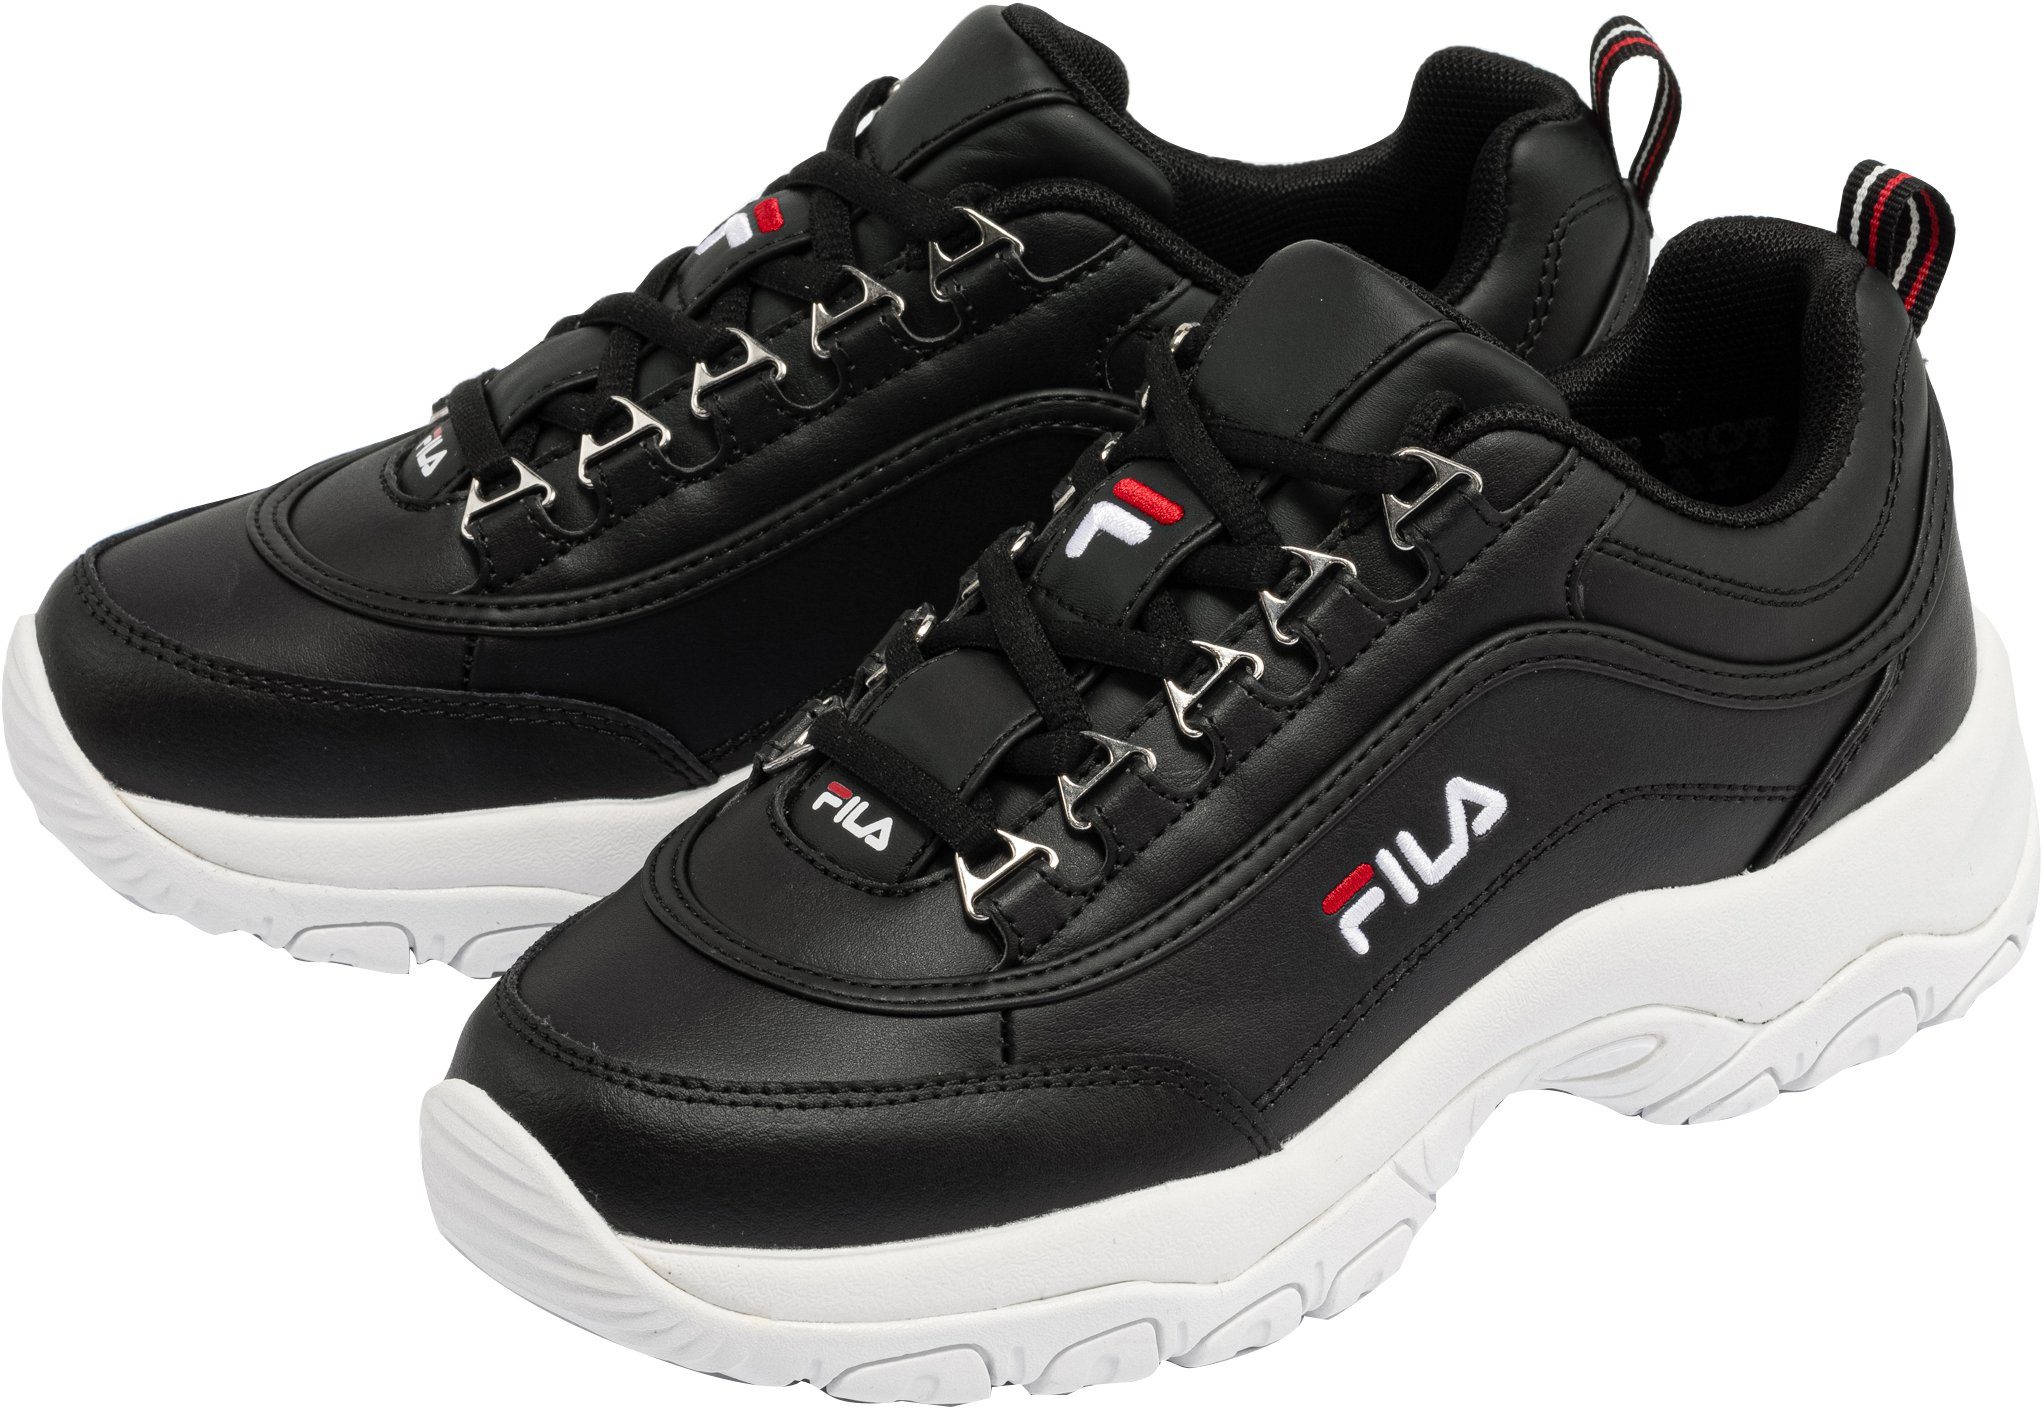 Fila Strada Low Wmn Sneaker schwarz-weiß